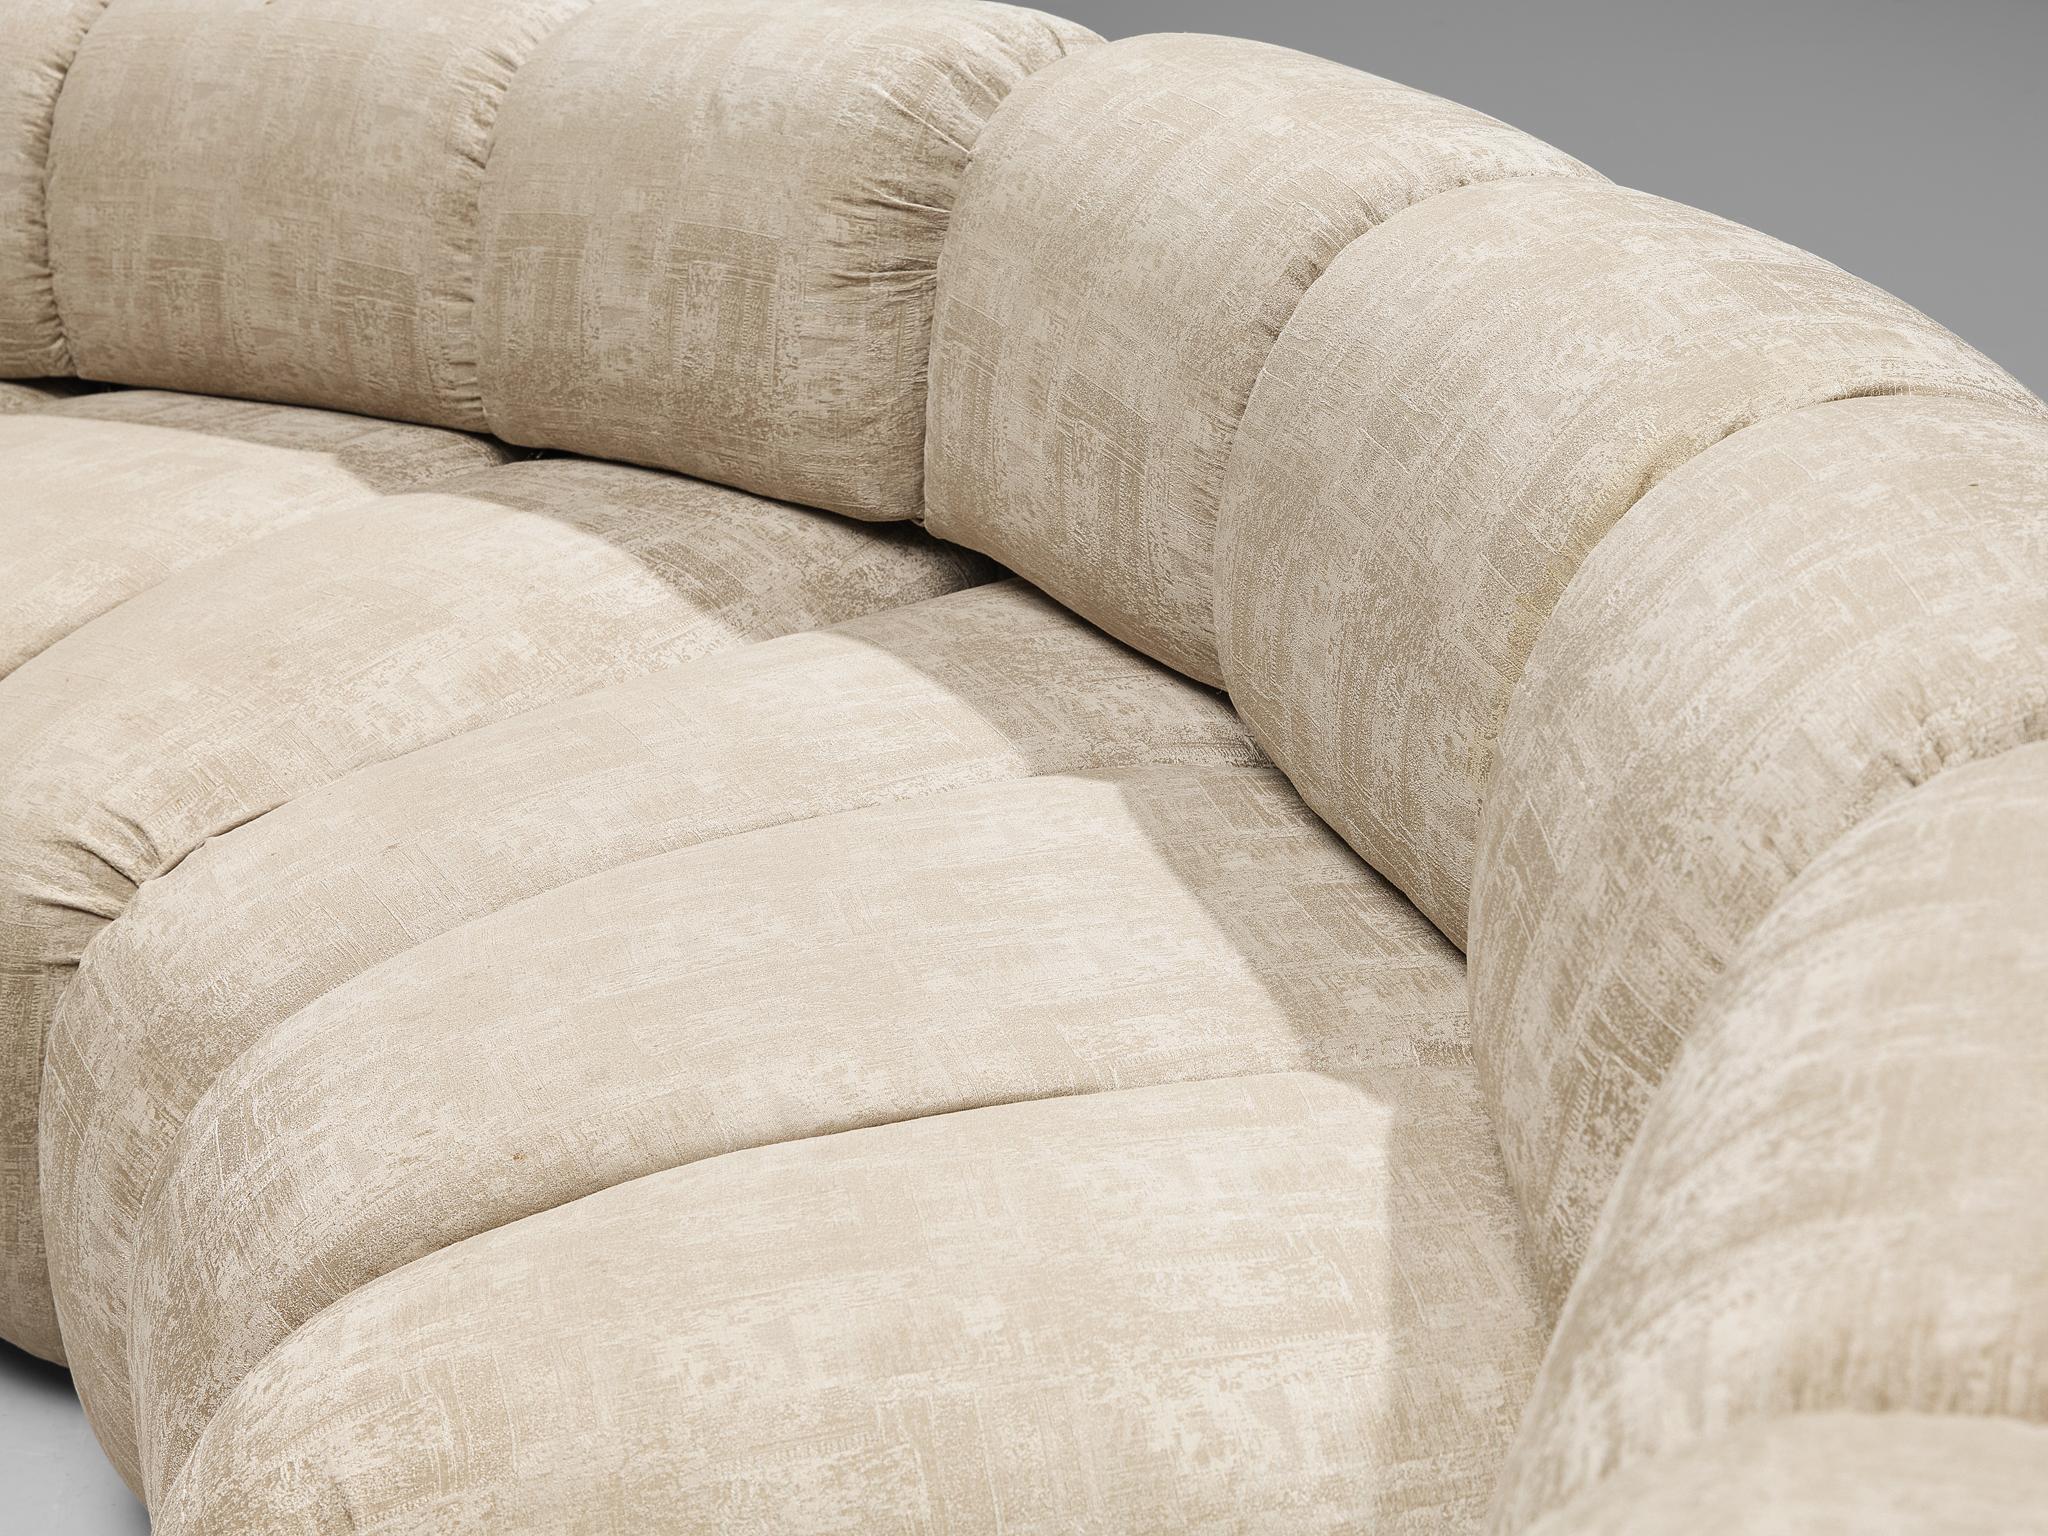 European Modular 'Caterpillar' Sofa in Cream Upholstery